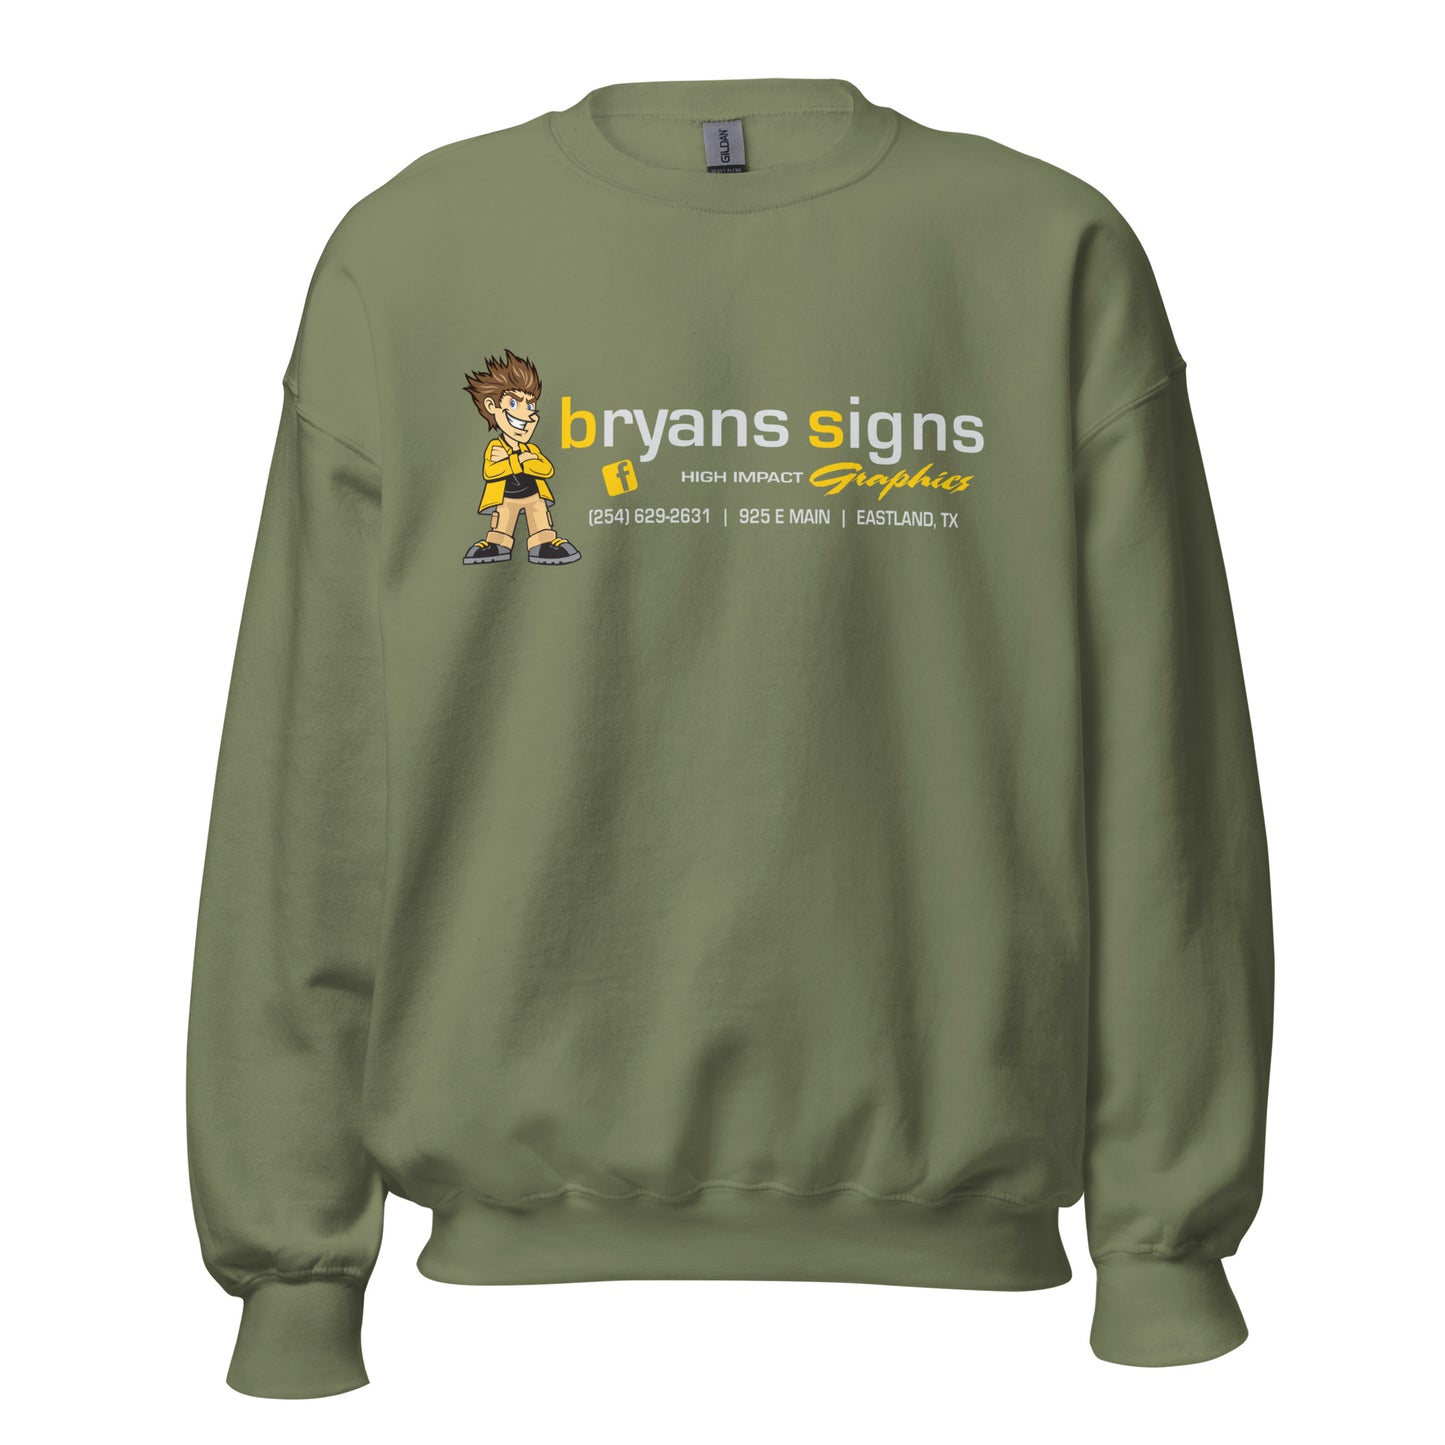 Bryan's Signs Sweatshirt